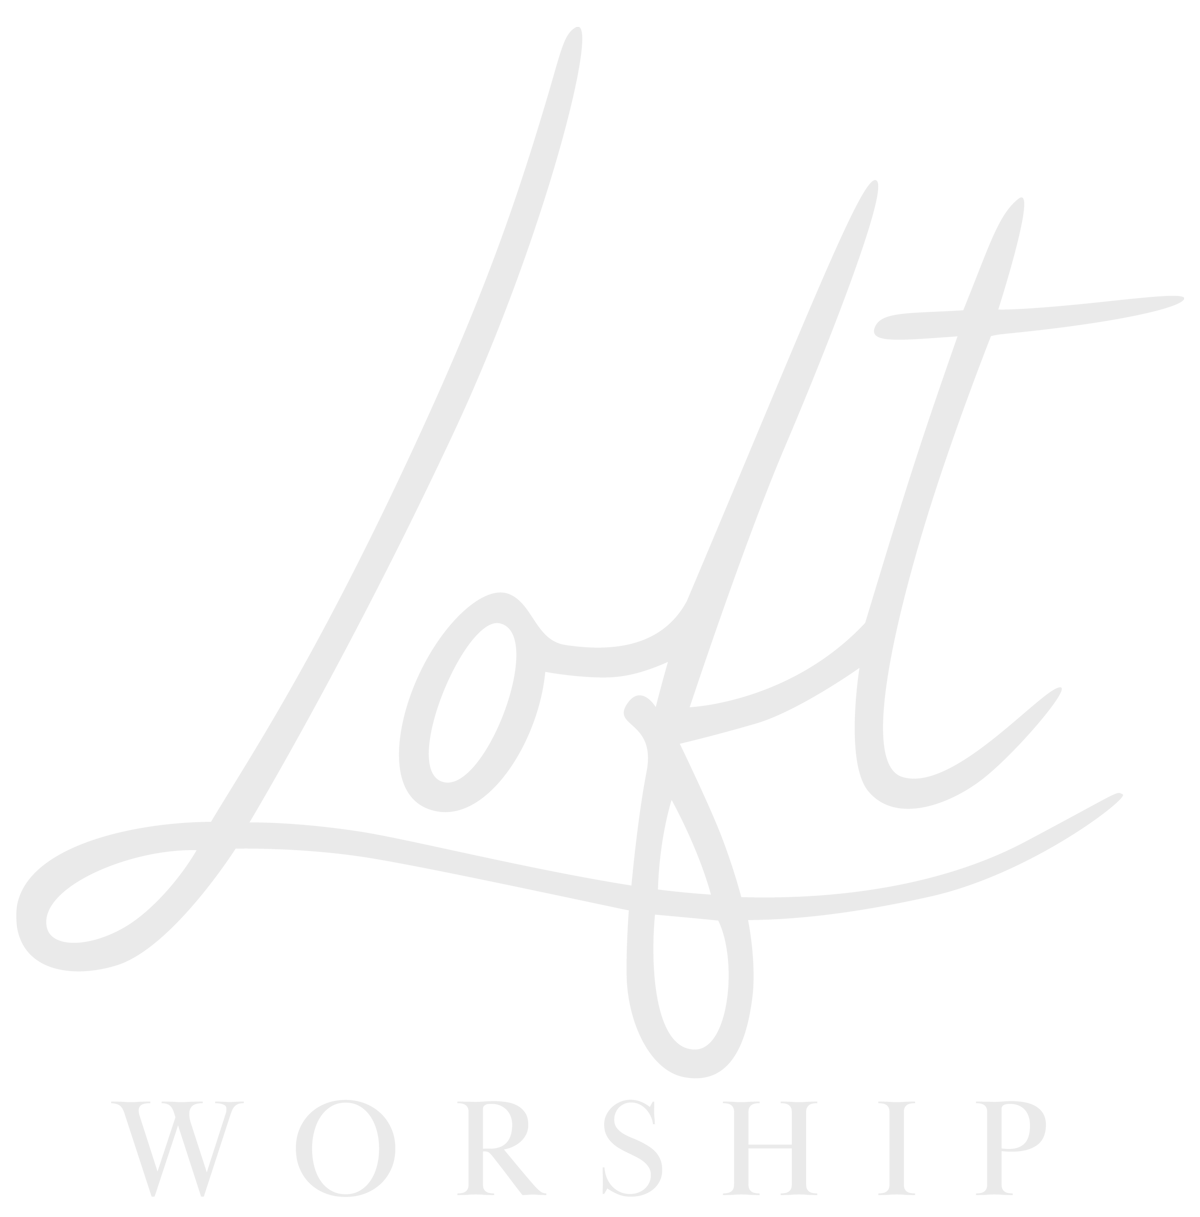 Loft Worship